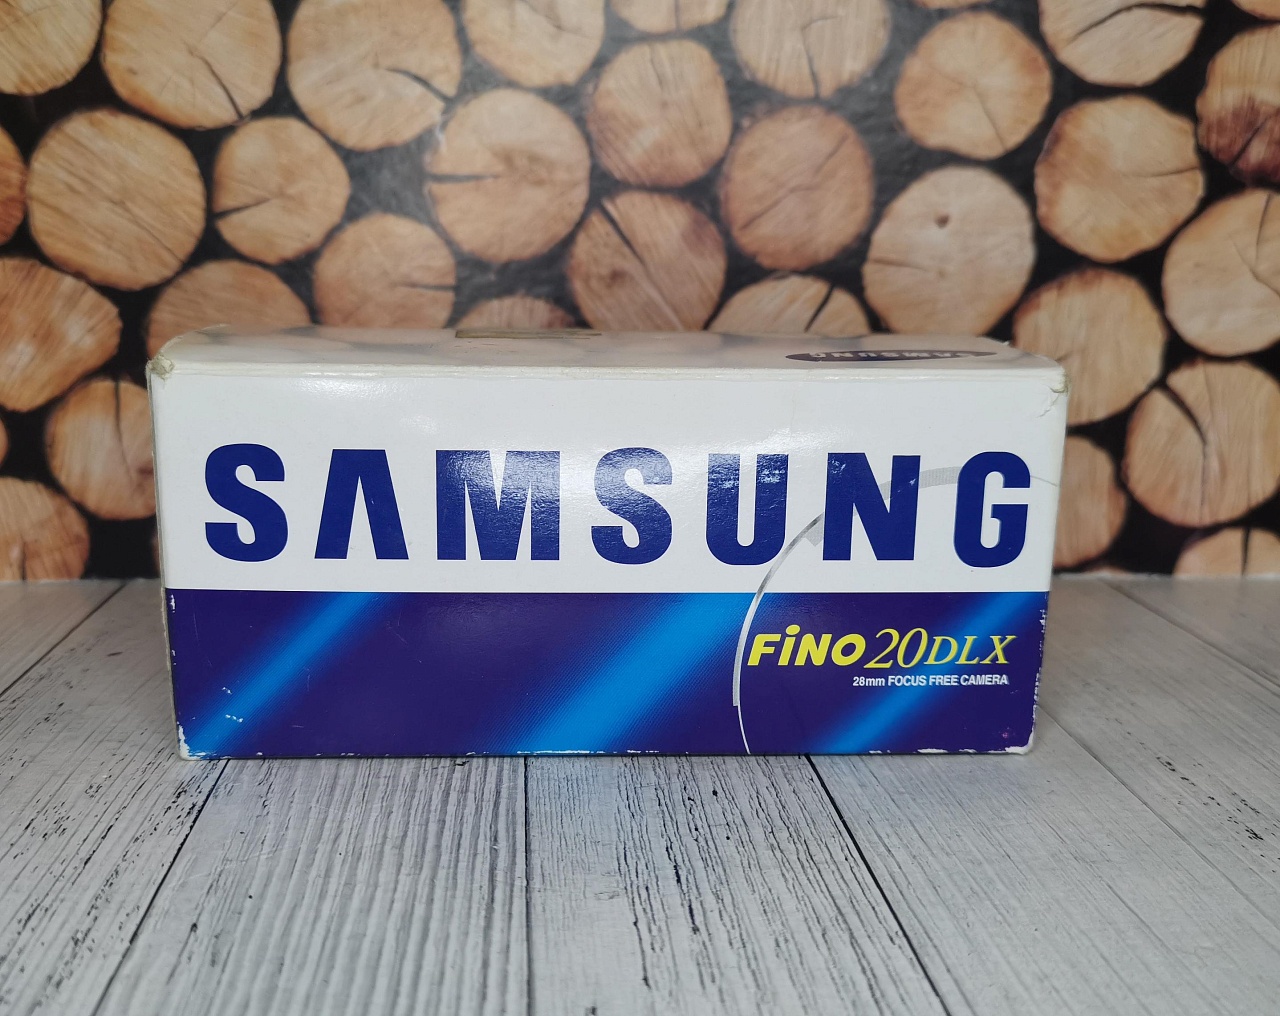 Samsung Fino 20 DLX (набор) фото №2